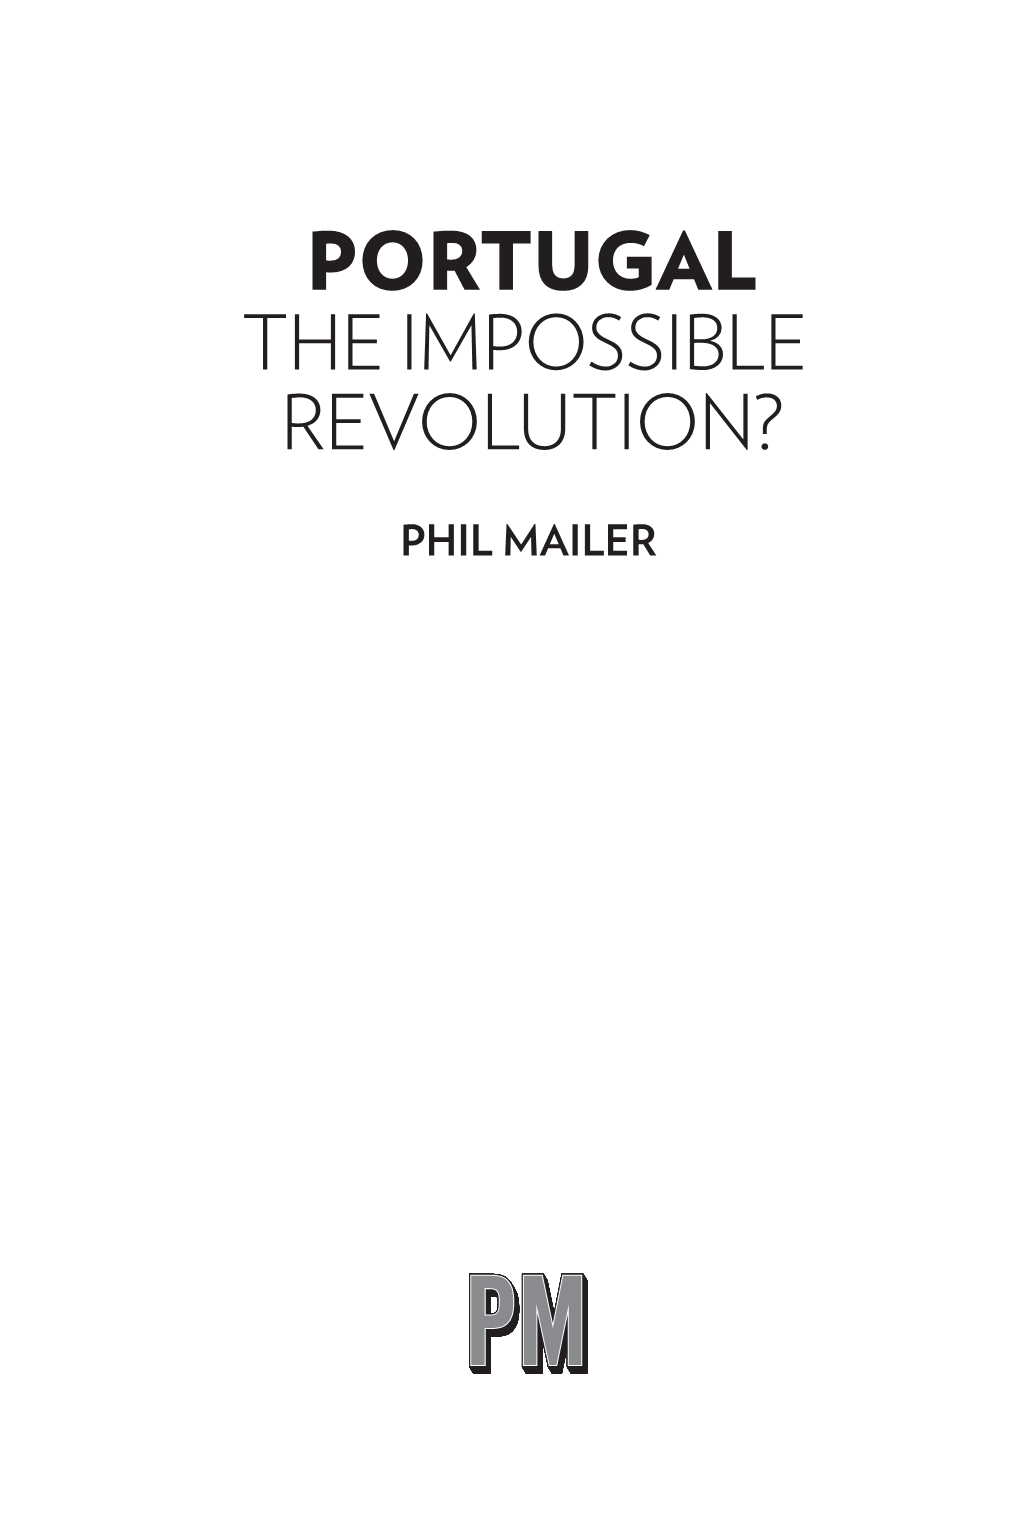 Portugal the Impossible Revolution?